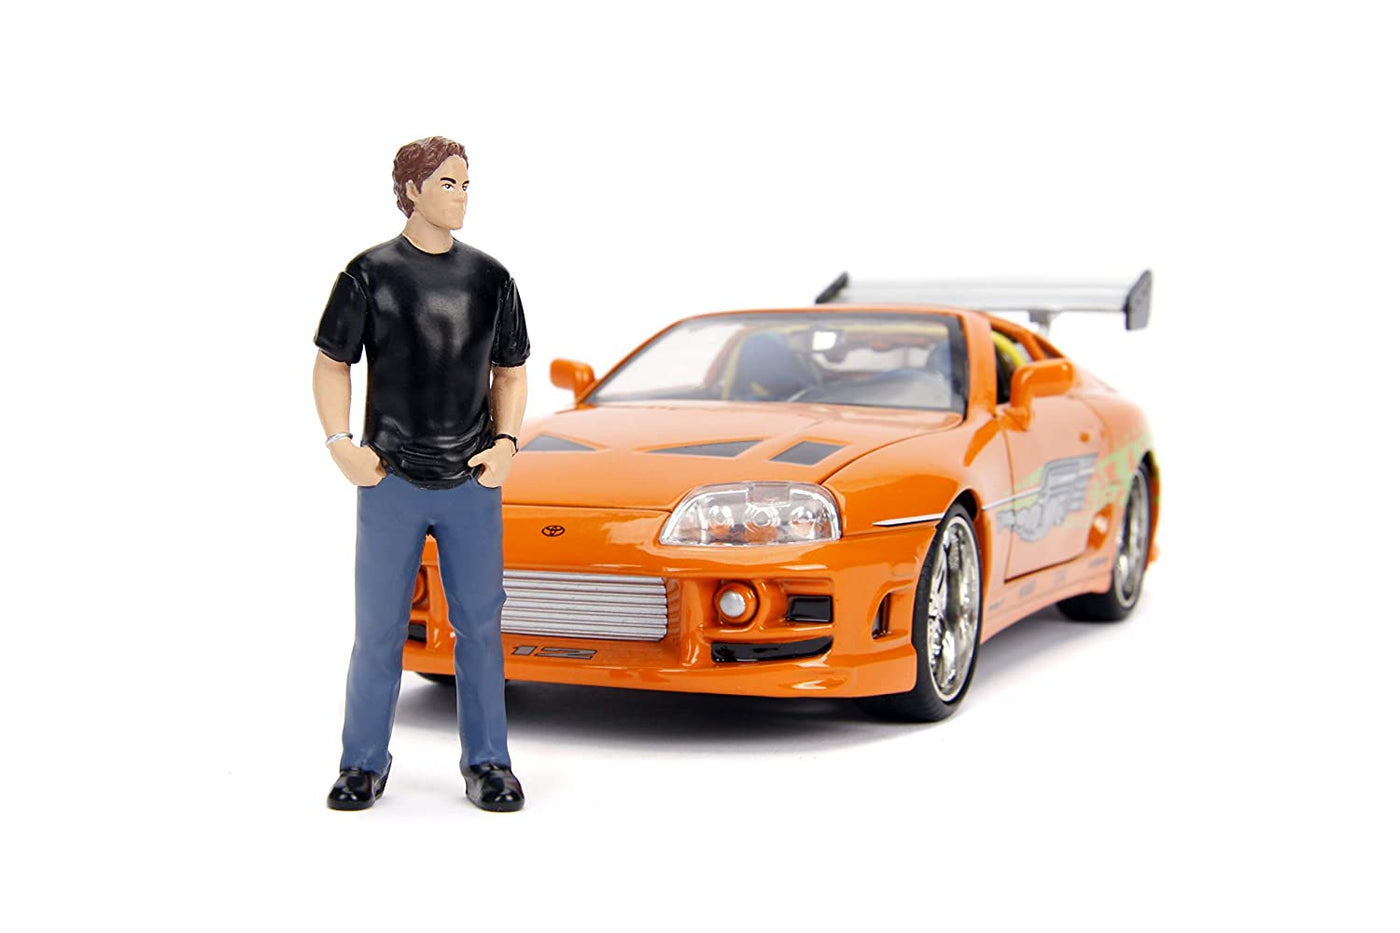 Brian & Toyota Supra- Fast & Furious (1:24 scale) | Jada Toys